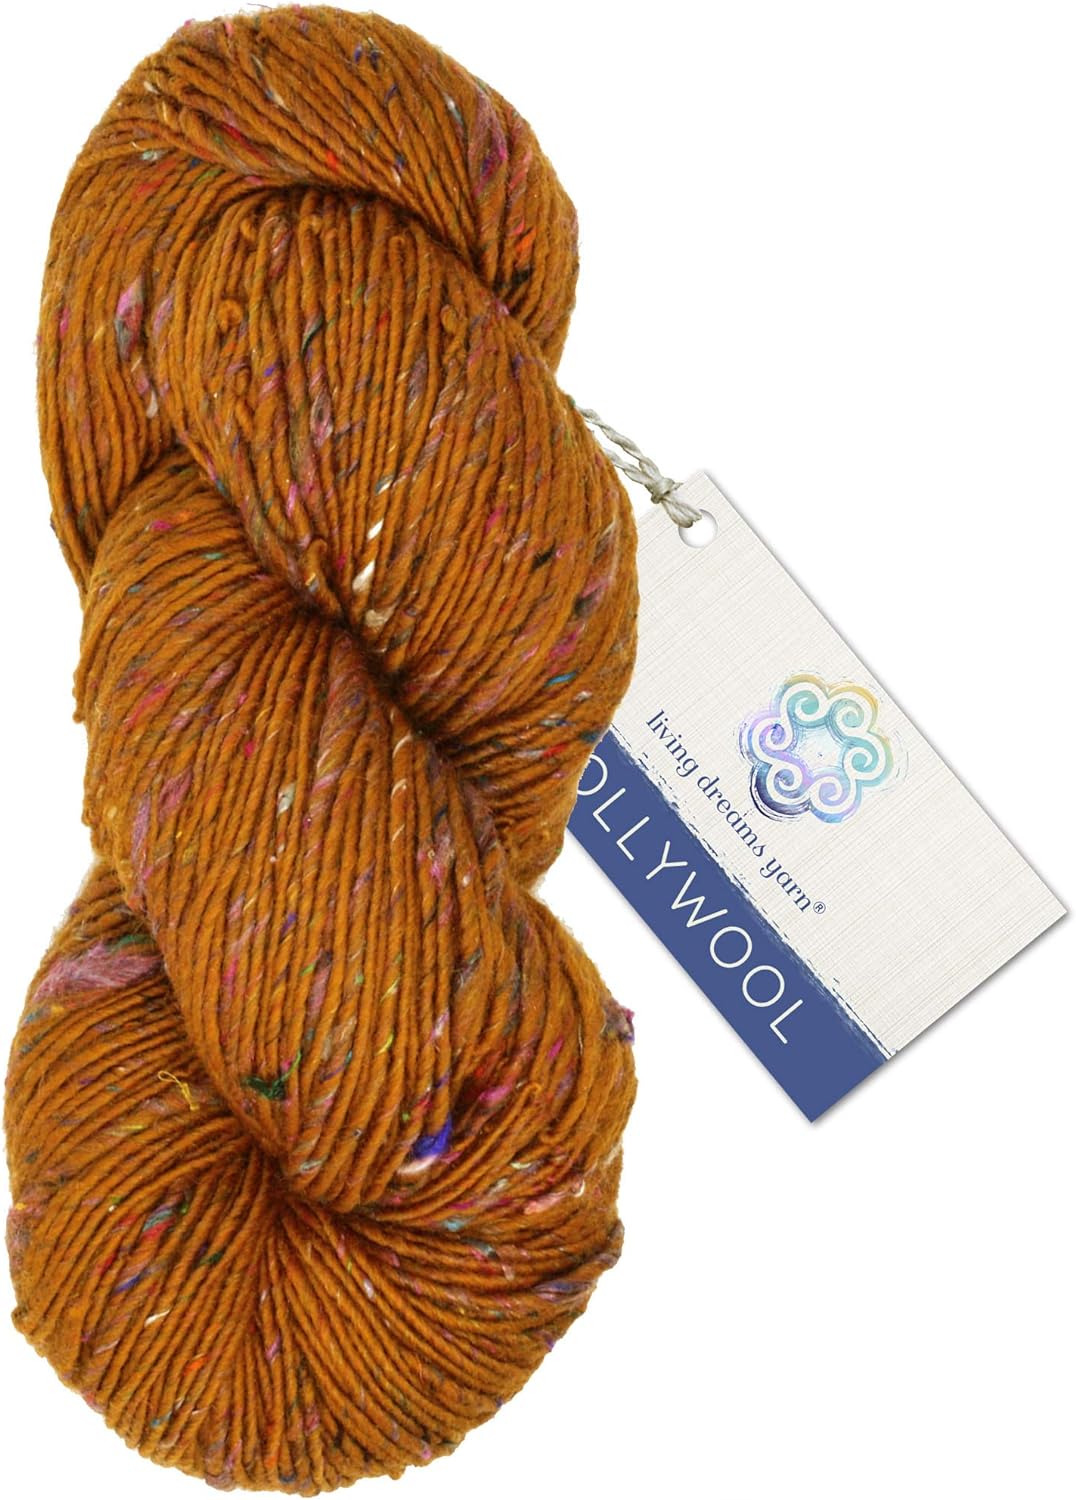 BOLLYWOOL SARI YARN - Merino Wool &#x26; Recycled Sari Silk. Single Ply Lopi Art Yarn. Pacific Northwest Homespun, Soft, Squishy. Color: Taj Mahal